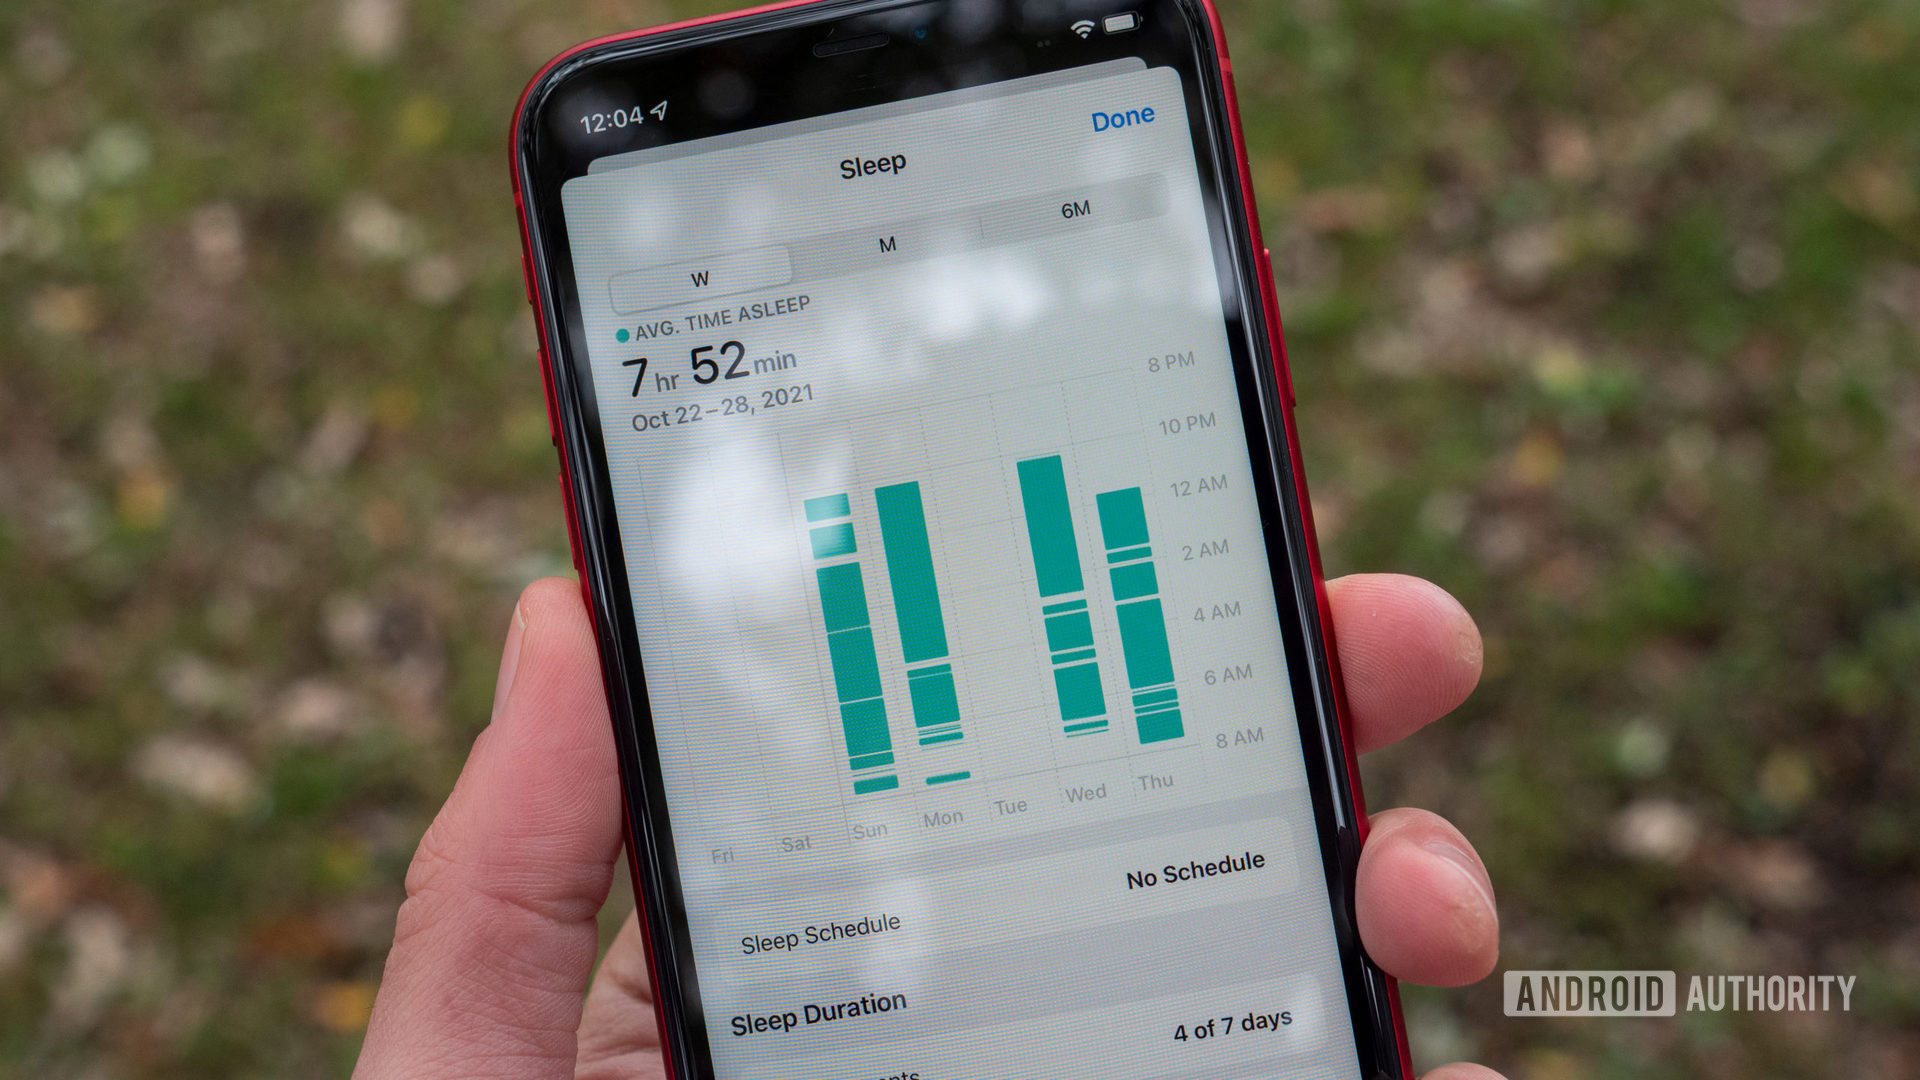 The iPhone 11 Apple Health app displays a user's sleep tracking data.